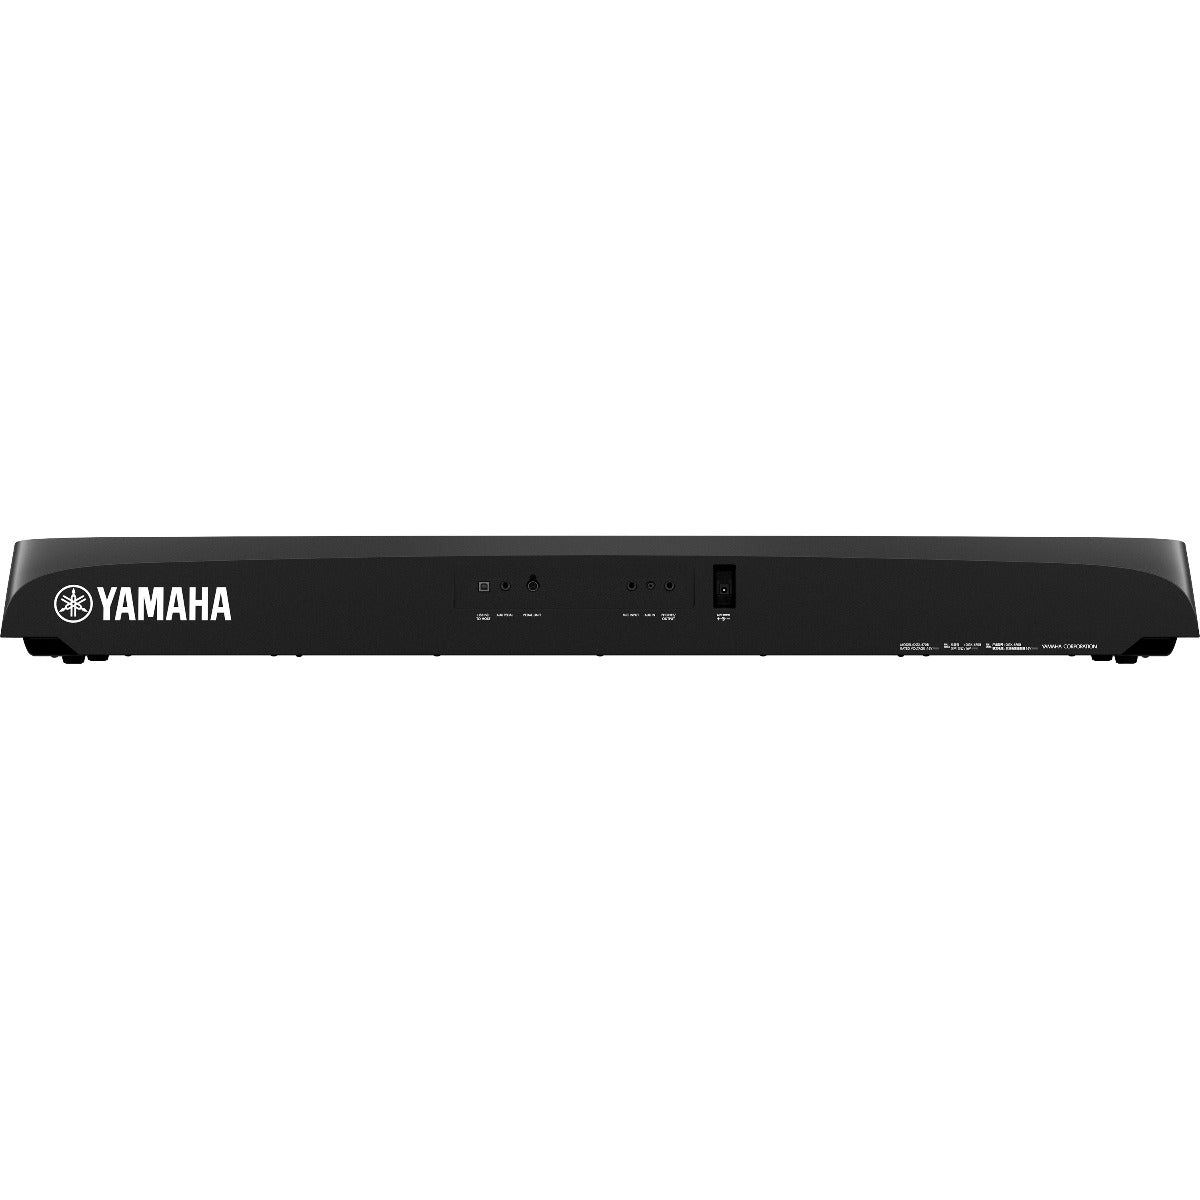 Rear view of Yamaha DGX-670 Portable Grand Digital Piano - Black